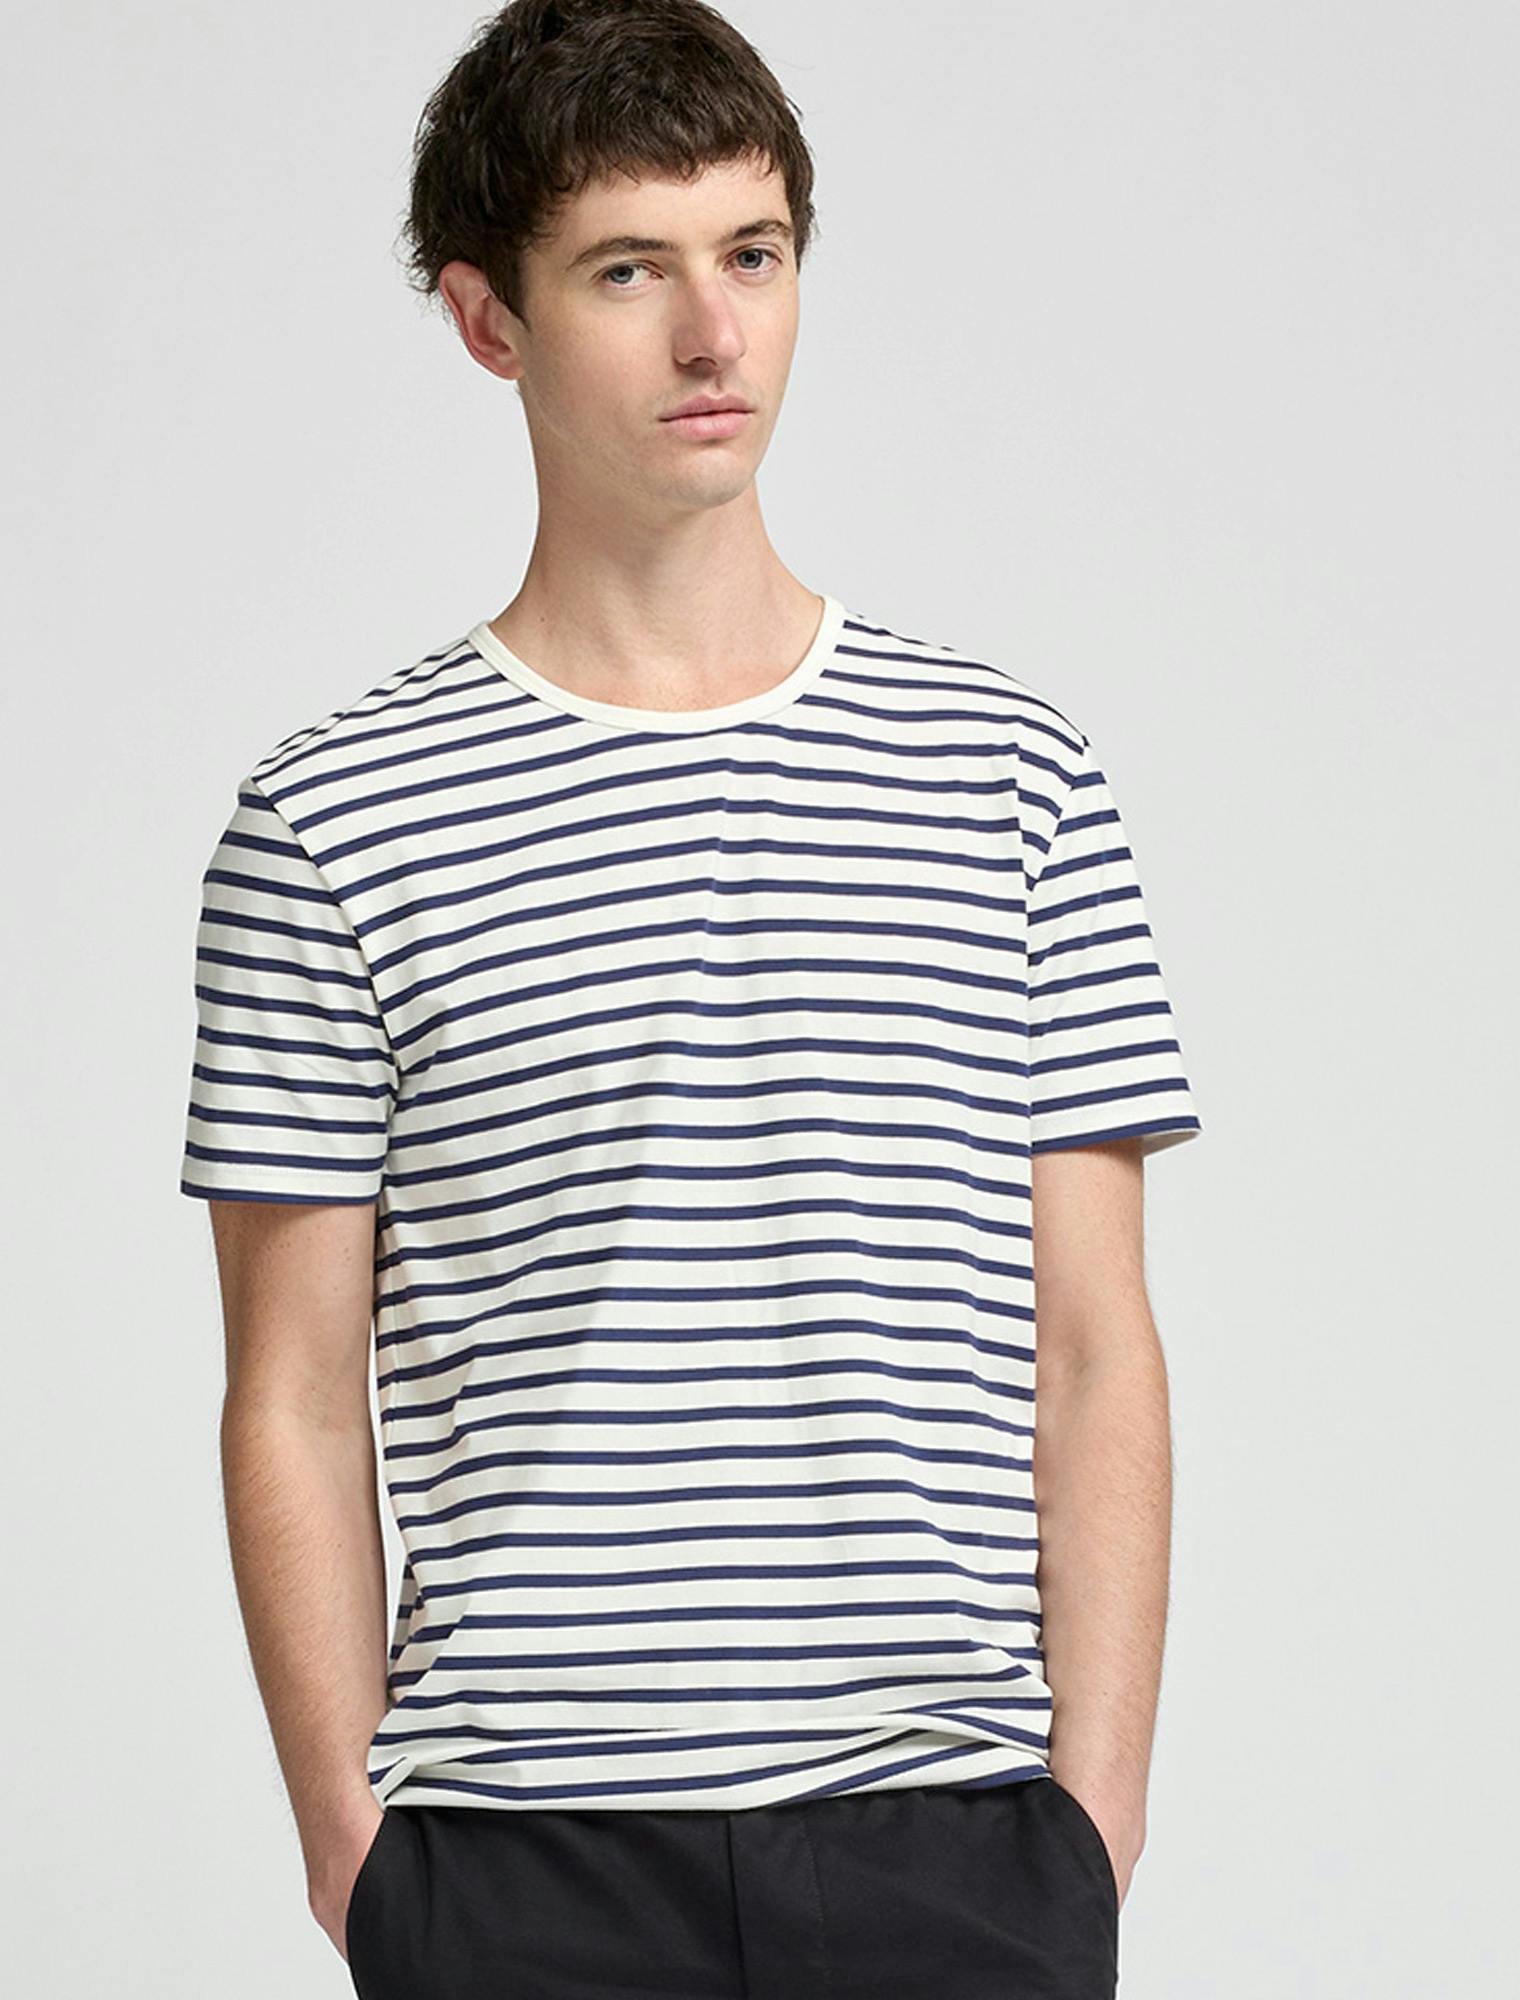 Men's White and Navy Striped T-Shirt - Premium Striped Tee